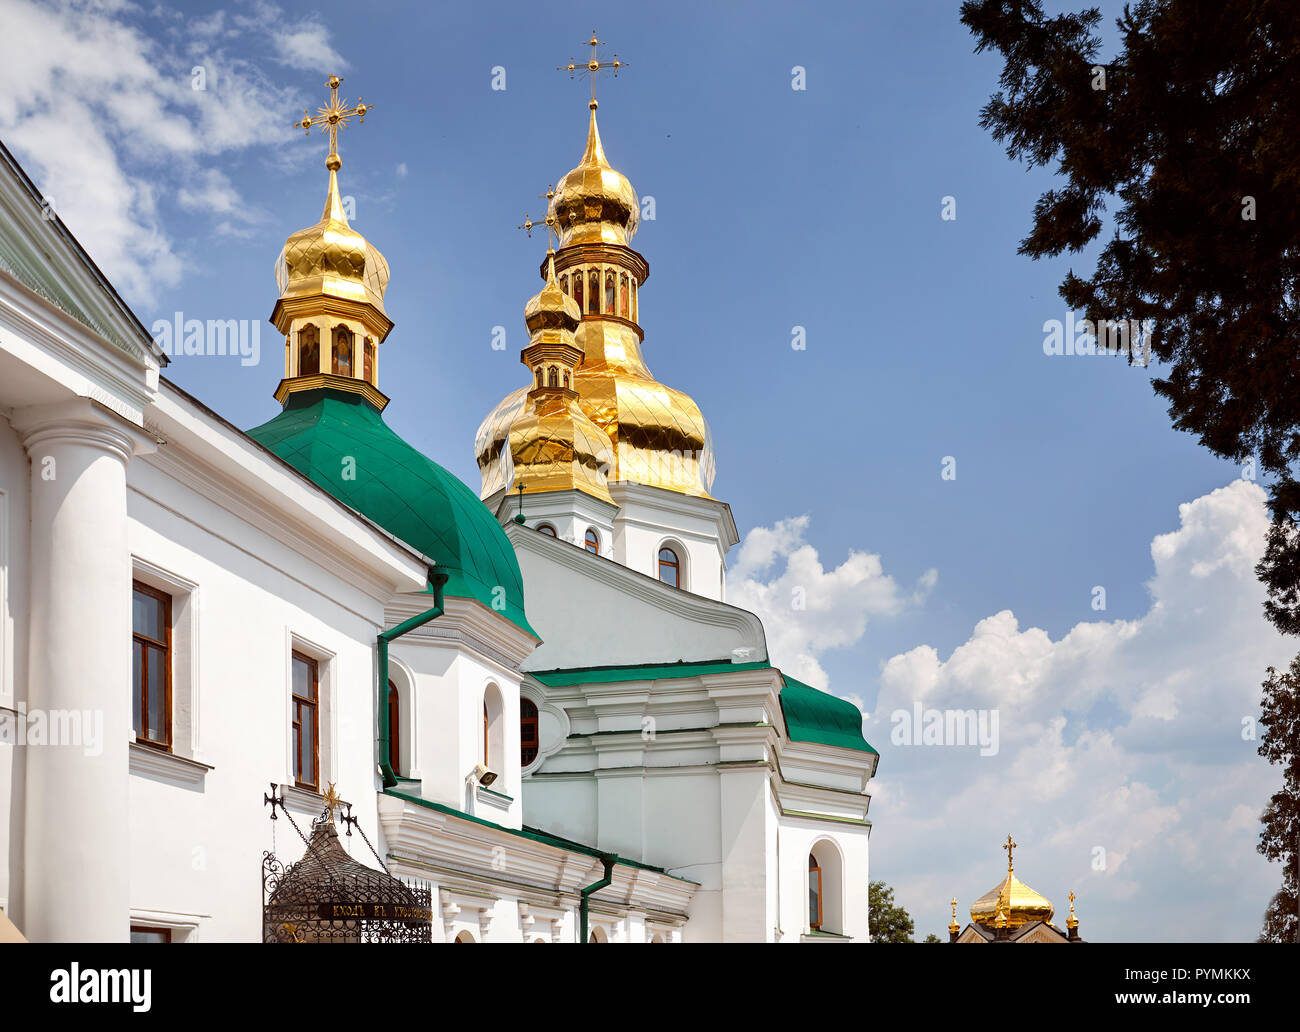 Kirche mit goldenen Kuppeln in Kiew Pechersk Lavra Christian komplexe gegen den blauen Himmel. Alte historische Architektur in Kiew, Ukraine Stockfoto